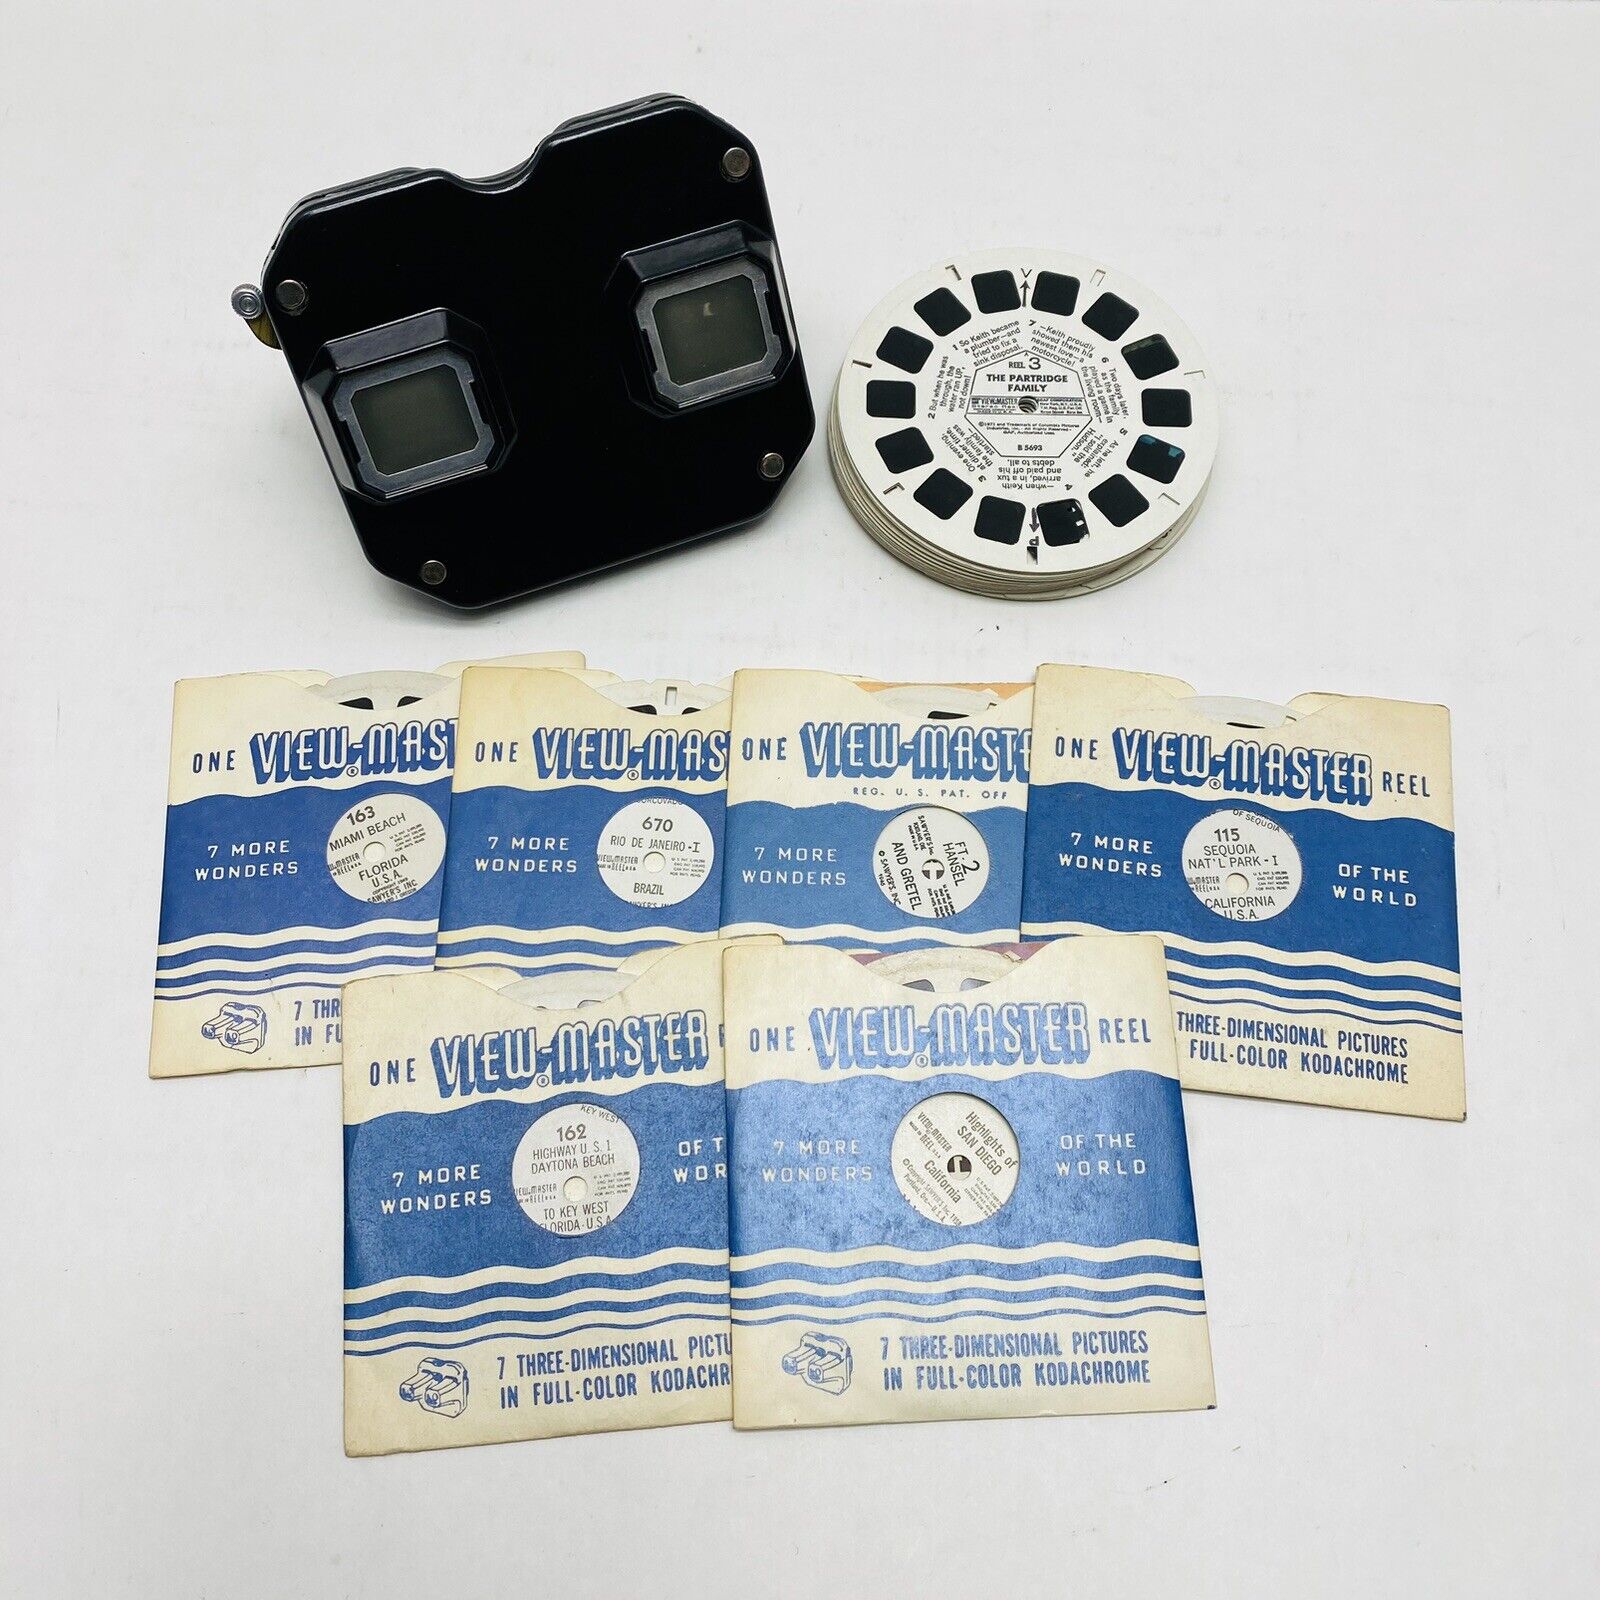 VTG Sawyers View-Master 3D Viewer Bakelite Black 1950s Stereoscope w/ 23 Reels